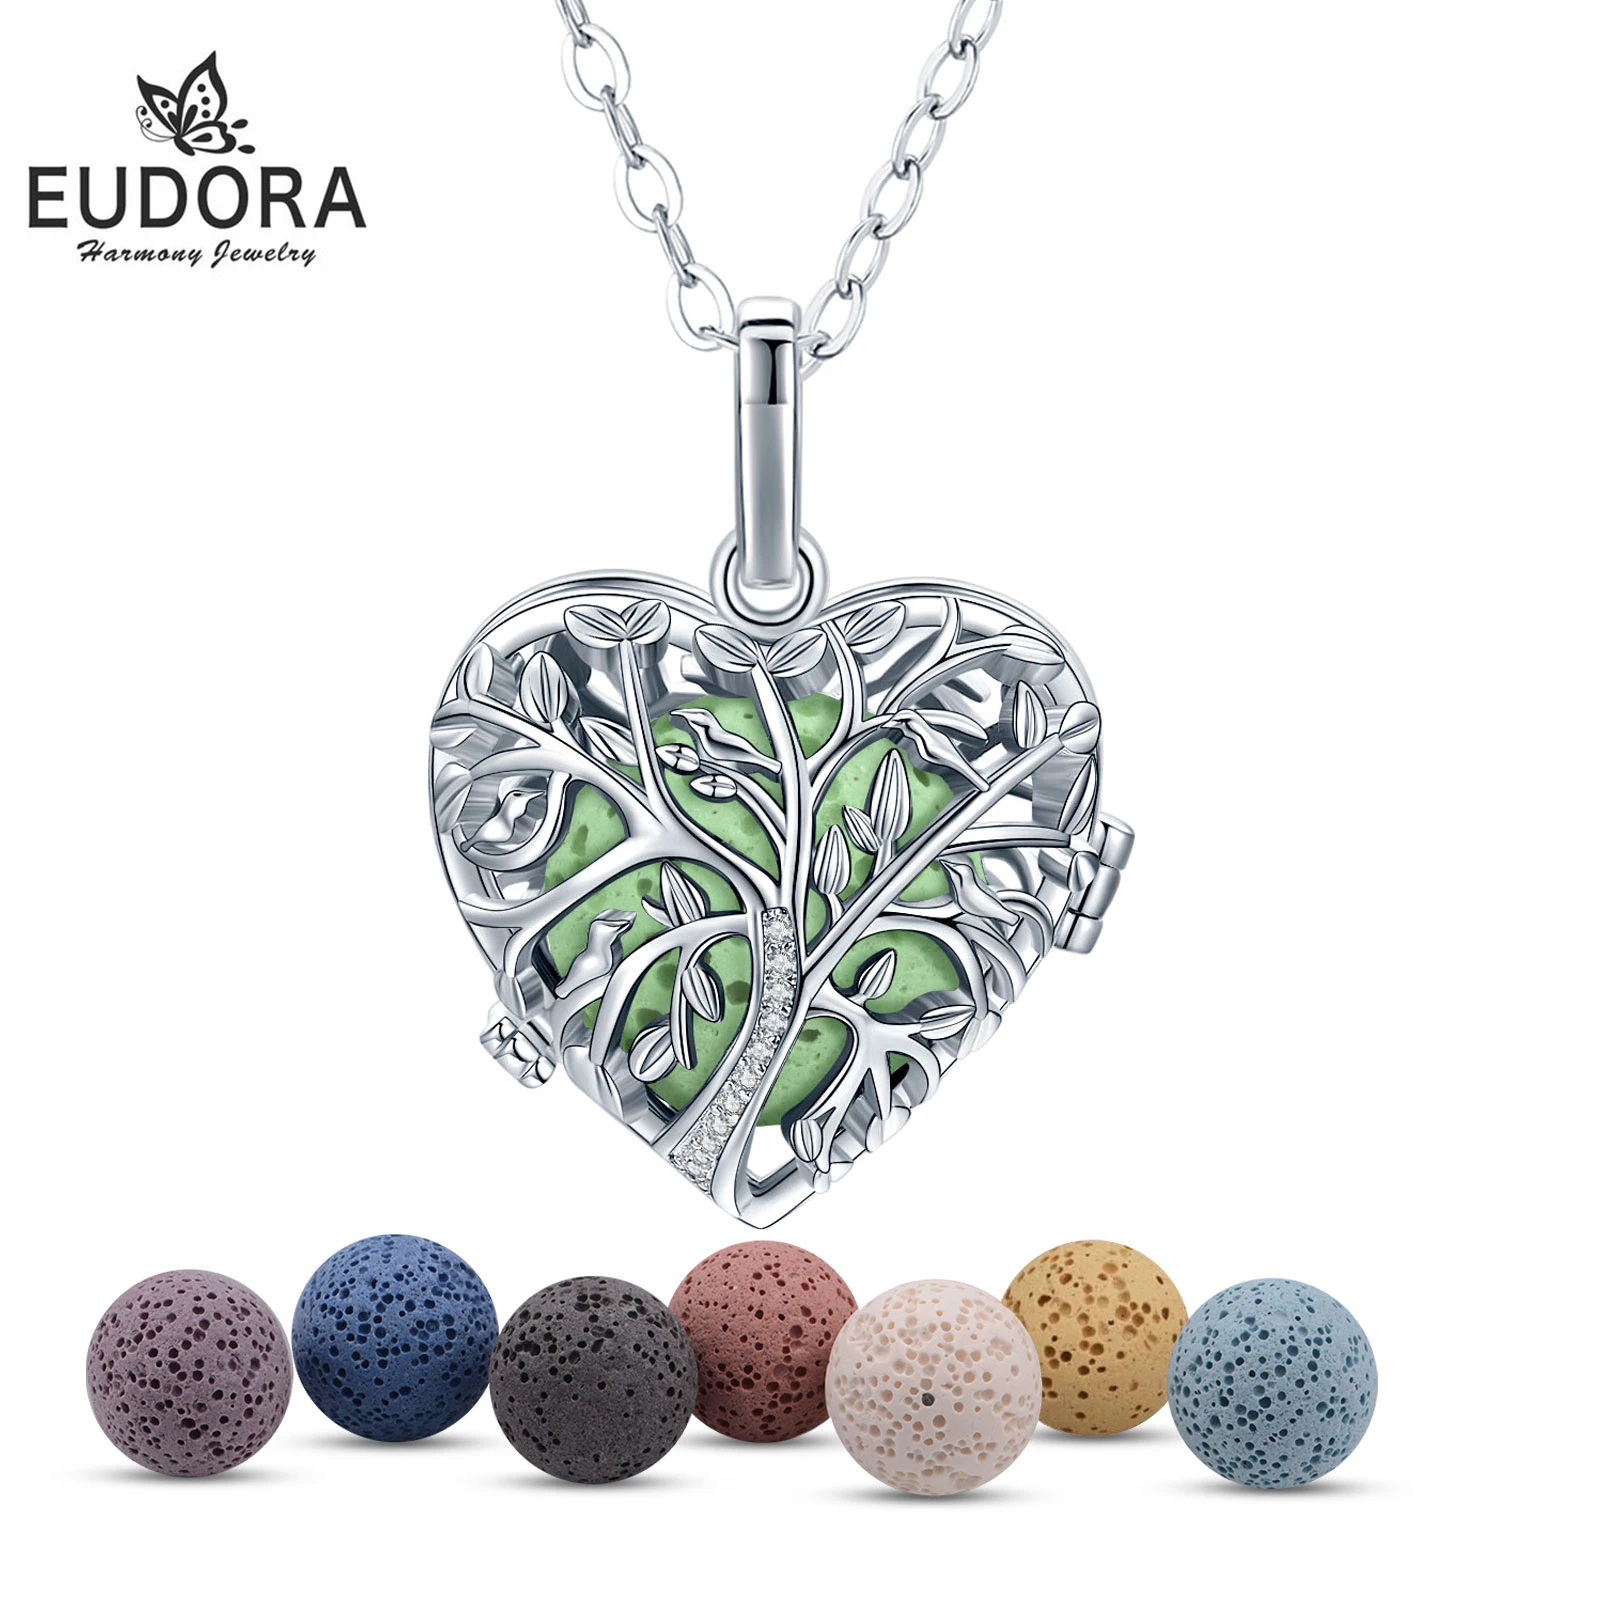 

Eudora 16mm Volcanic Lava Stone Meditation Necklace Tree of Life Relax Aroma Locket Cage Pendant Aromatherapy Jewelry Women Gift